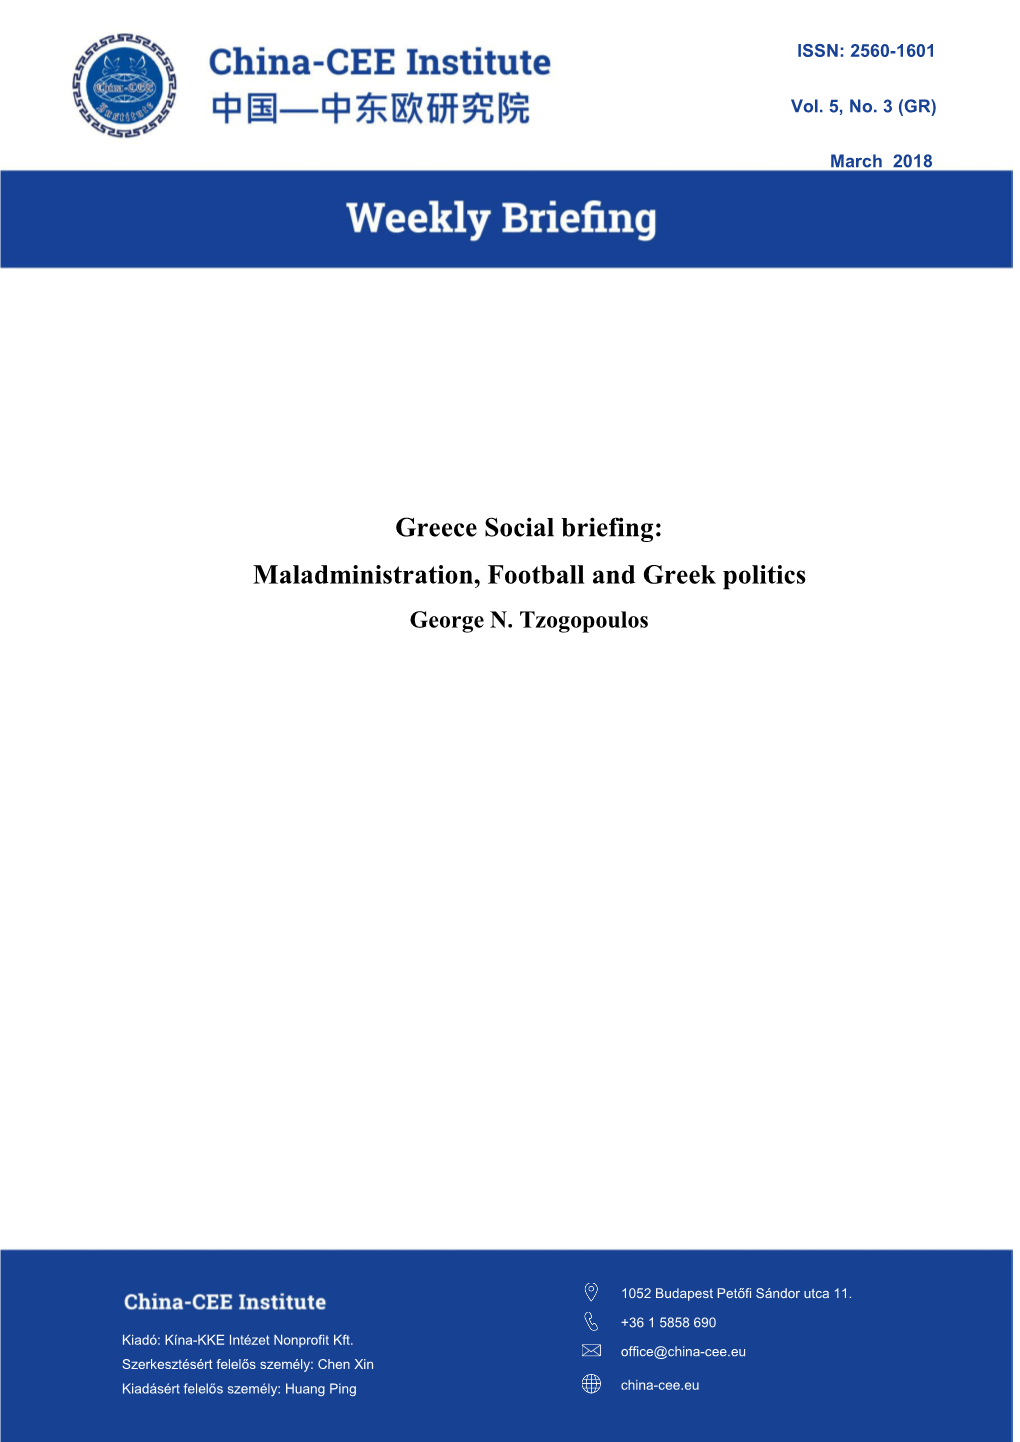 Greece Social Briefing: Maladministration, Football and Greek Politics George N